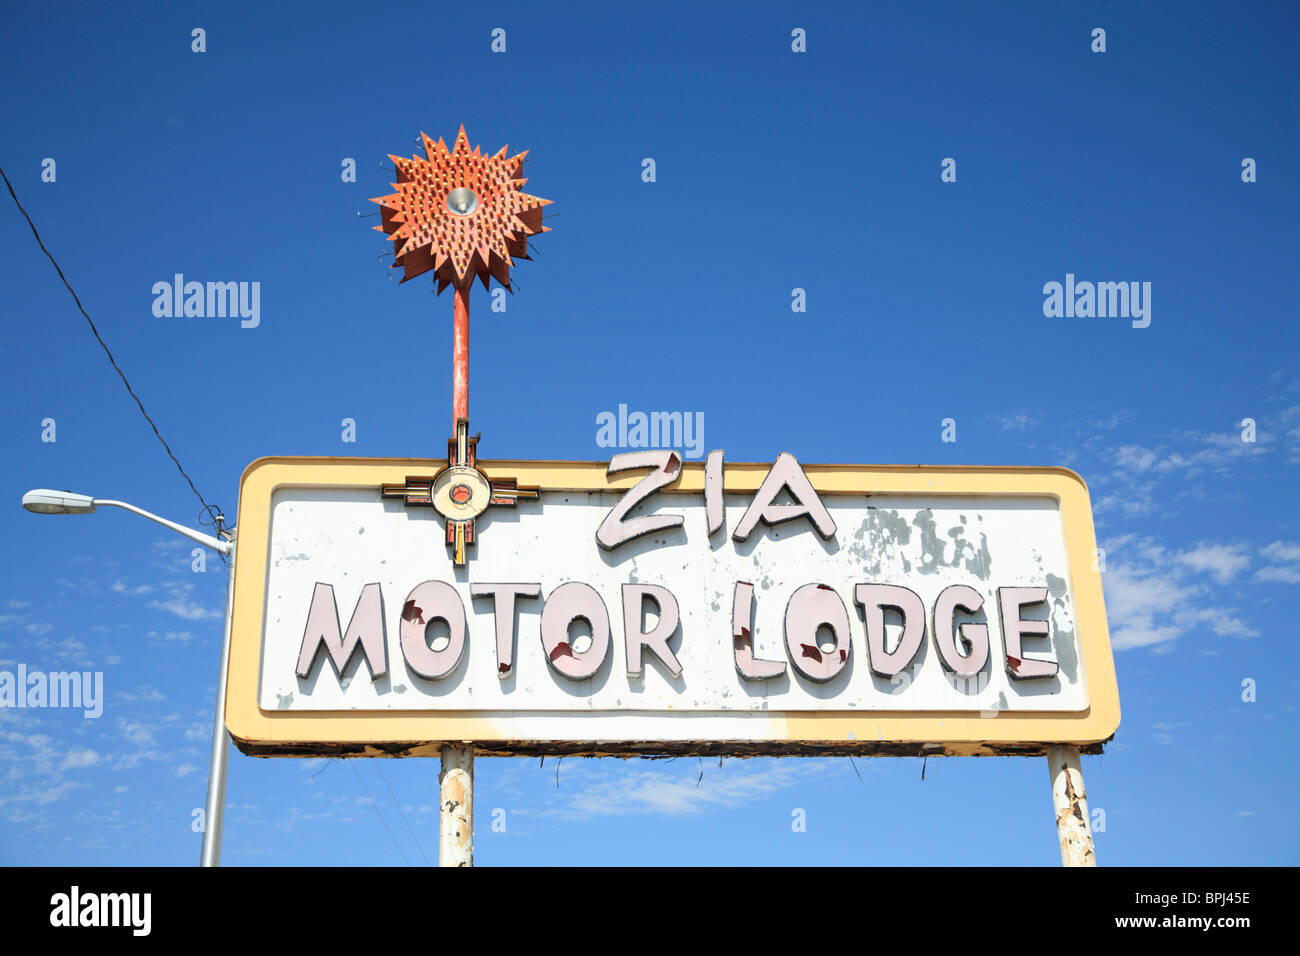 Zia motor lodge, Motel, Route 66, Albuquerque, New Mexico, USA Banque D'Images